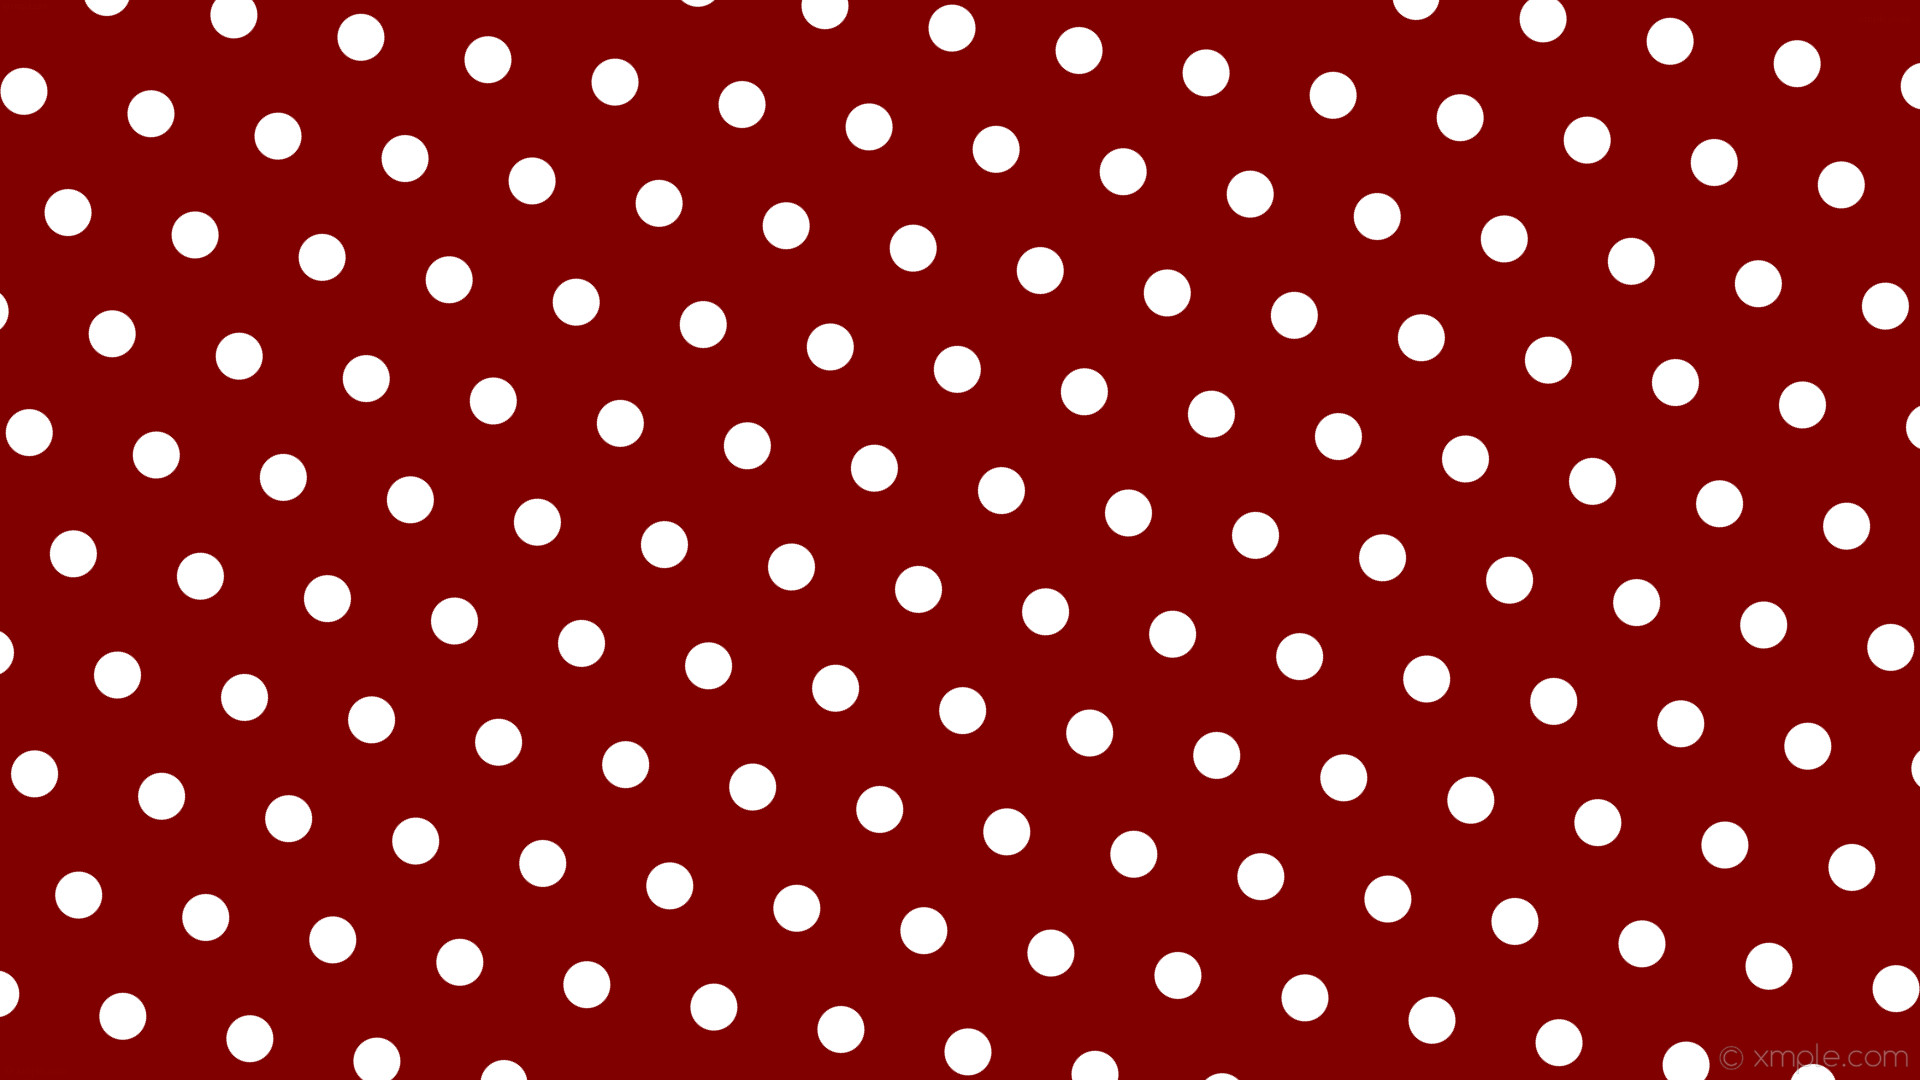 1920x1080 wallpaper white brown hexagon polka dots maroon #800000 #ffffff diagonal  50Â° 47px 129px